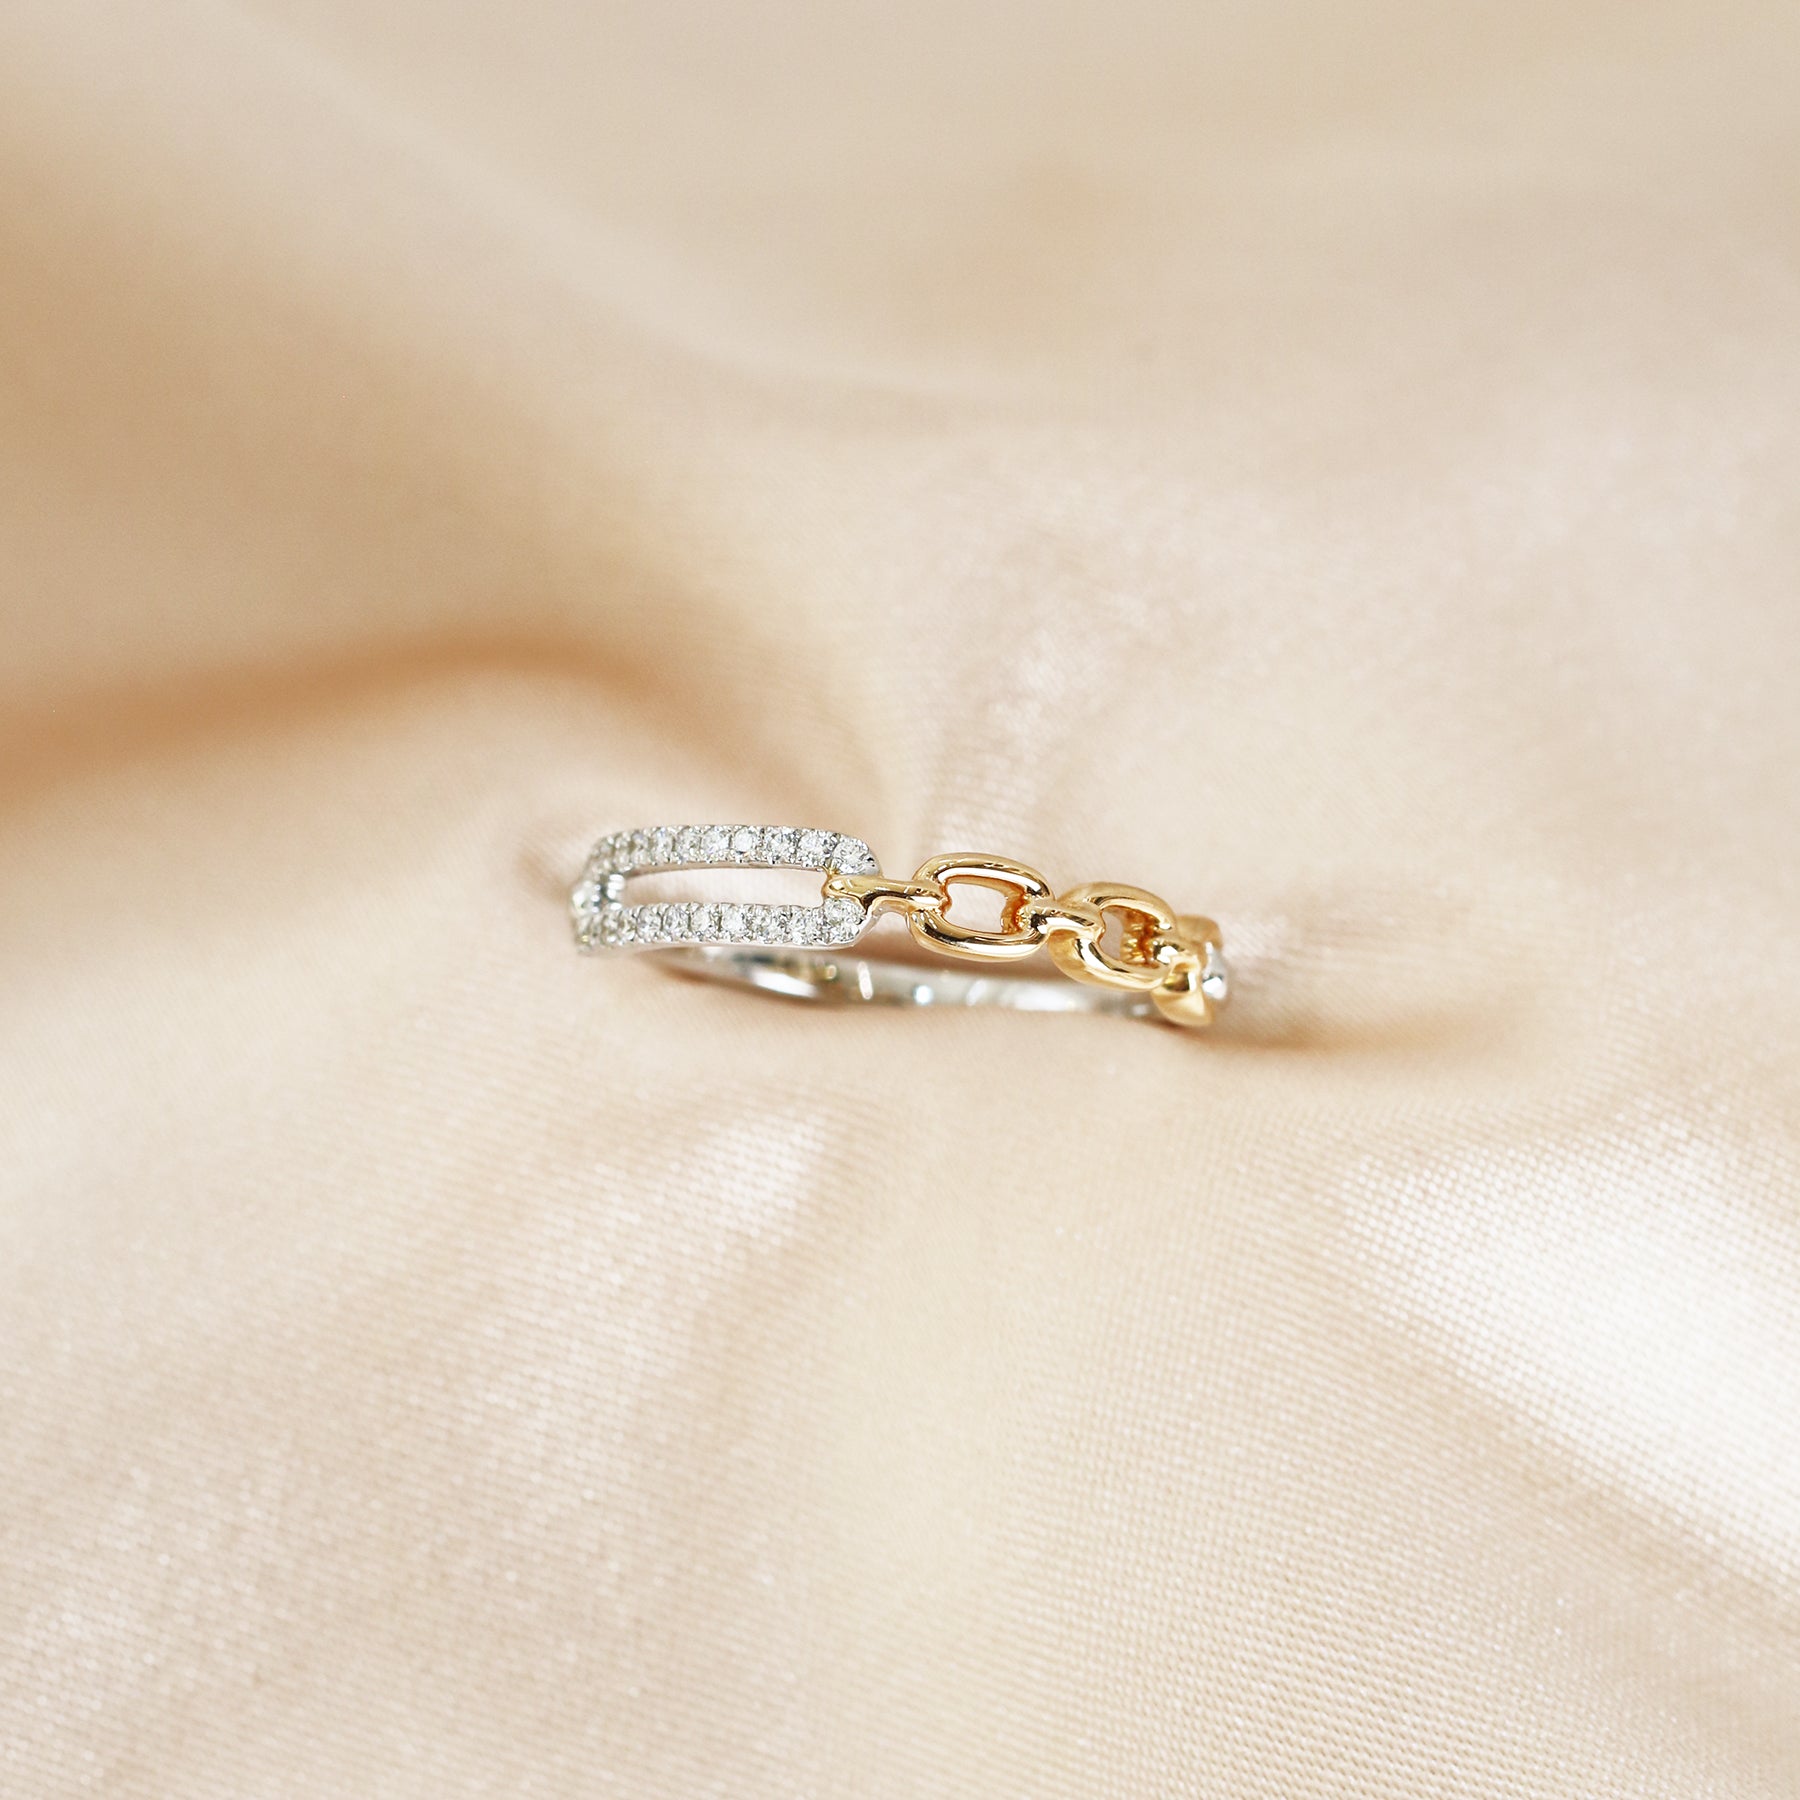 18k玫瑰金白金鑽石鏈條戒指 18k Rose Gold and White Gold Chain Diamond Ring